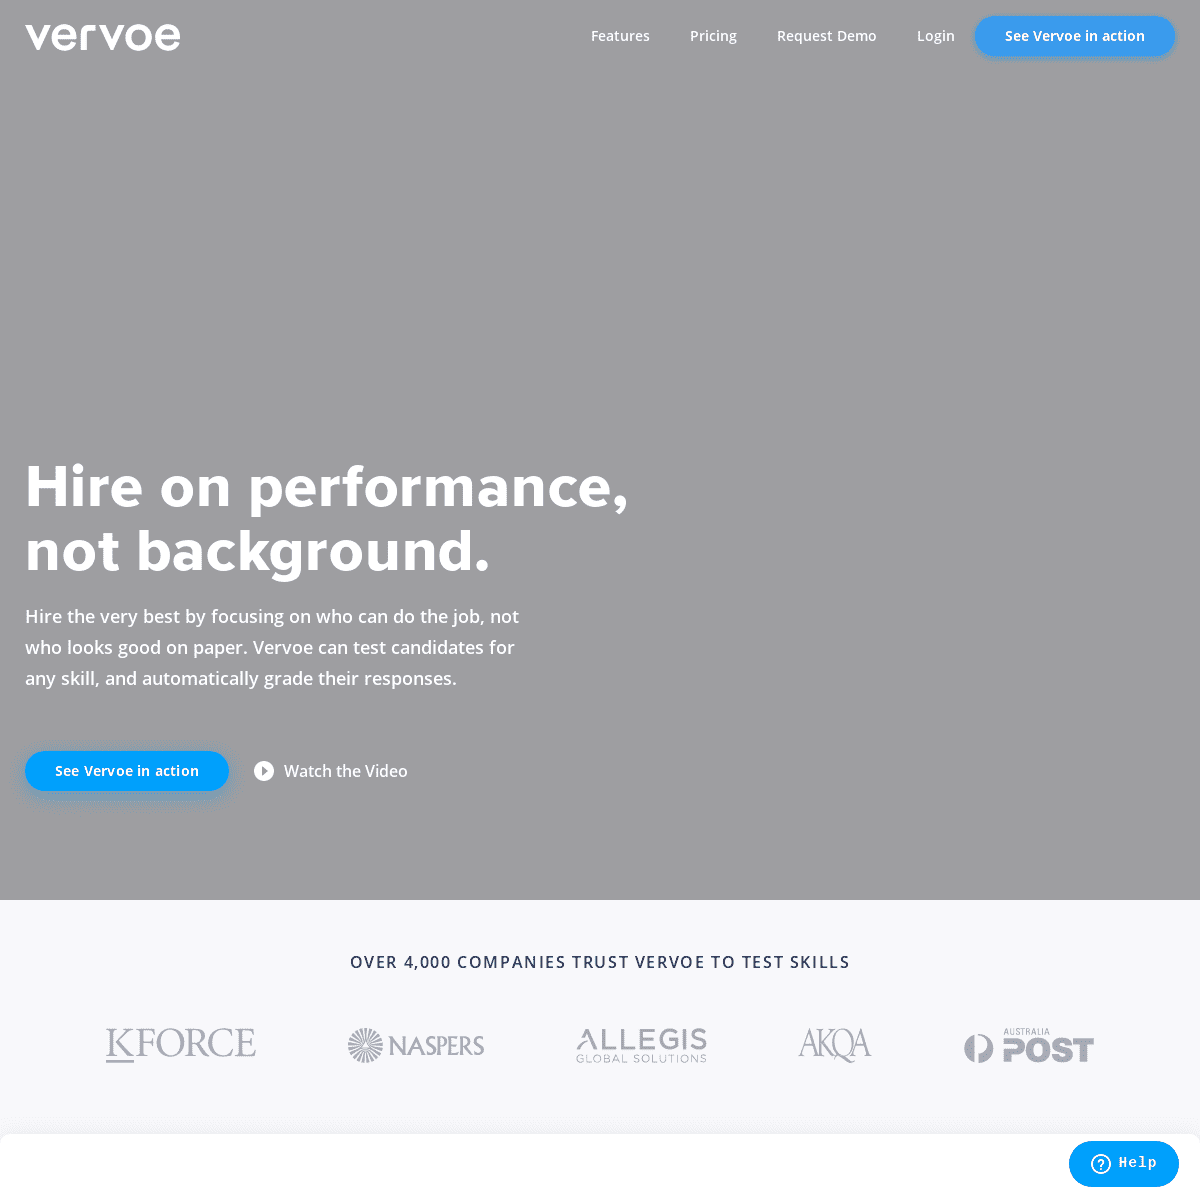 A complete backup of vervoe.com